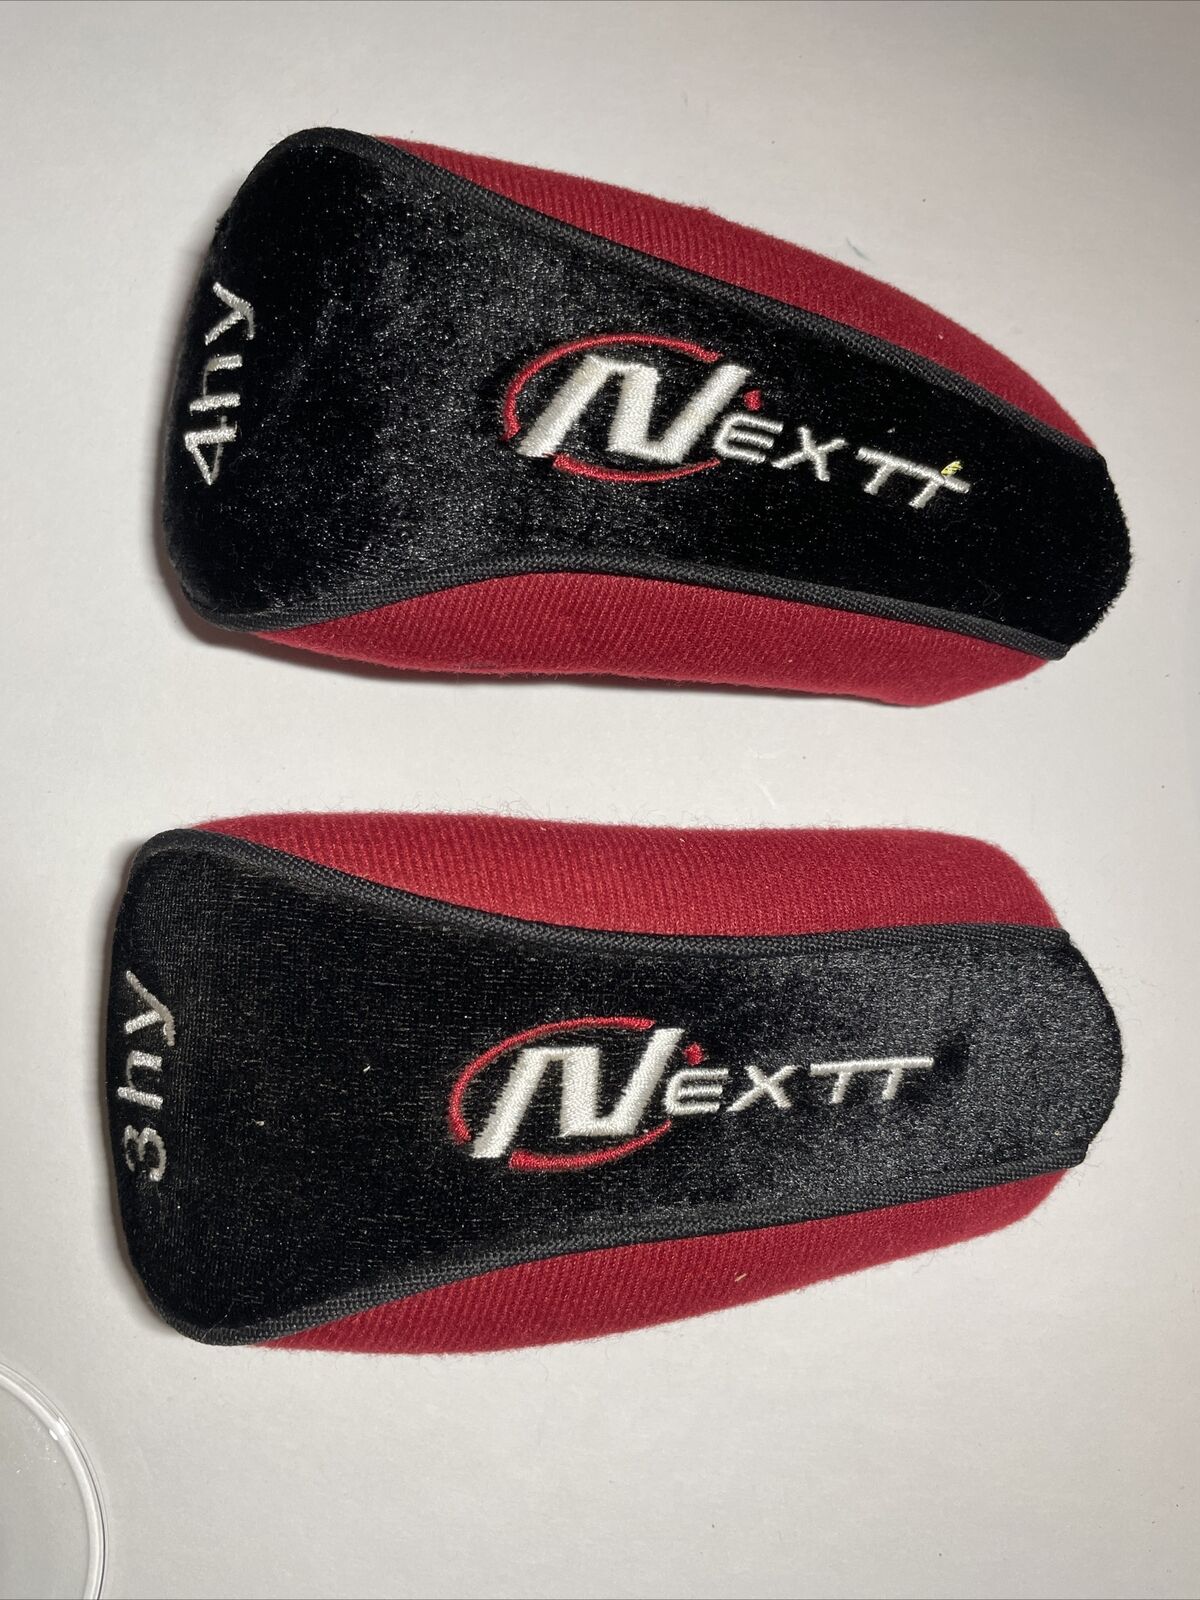 Nextt Golf club covers Nextt - фотография #3